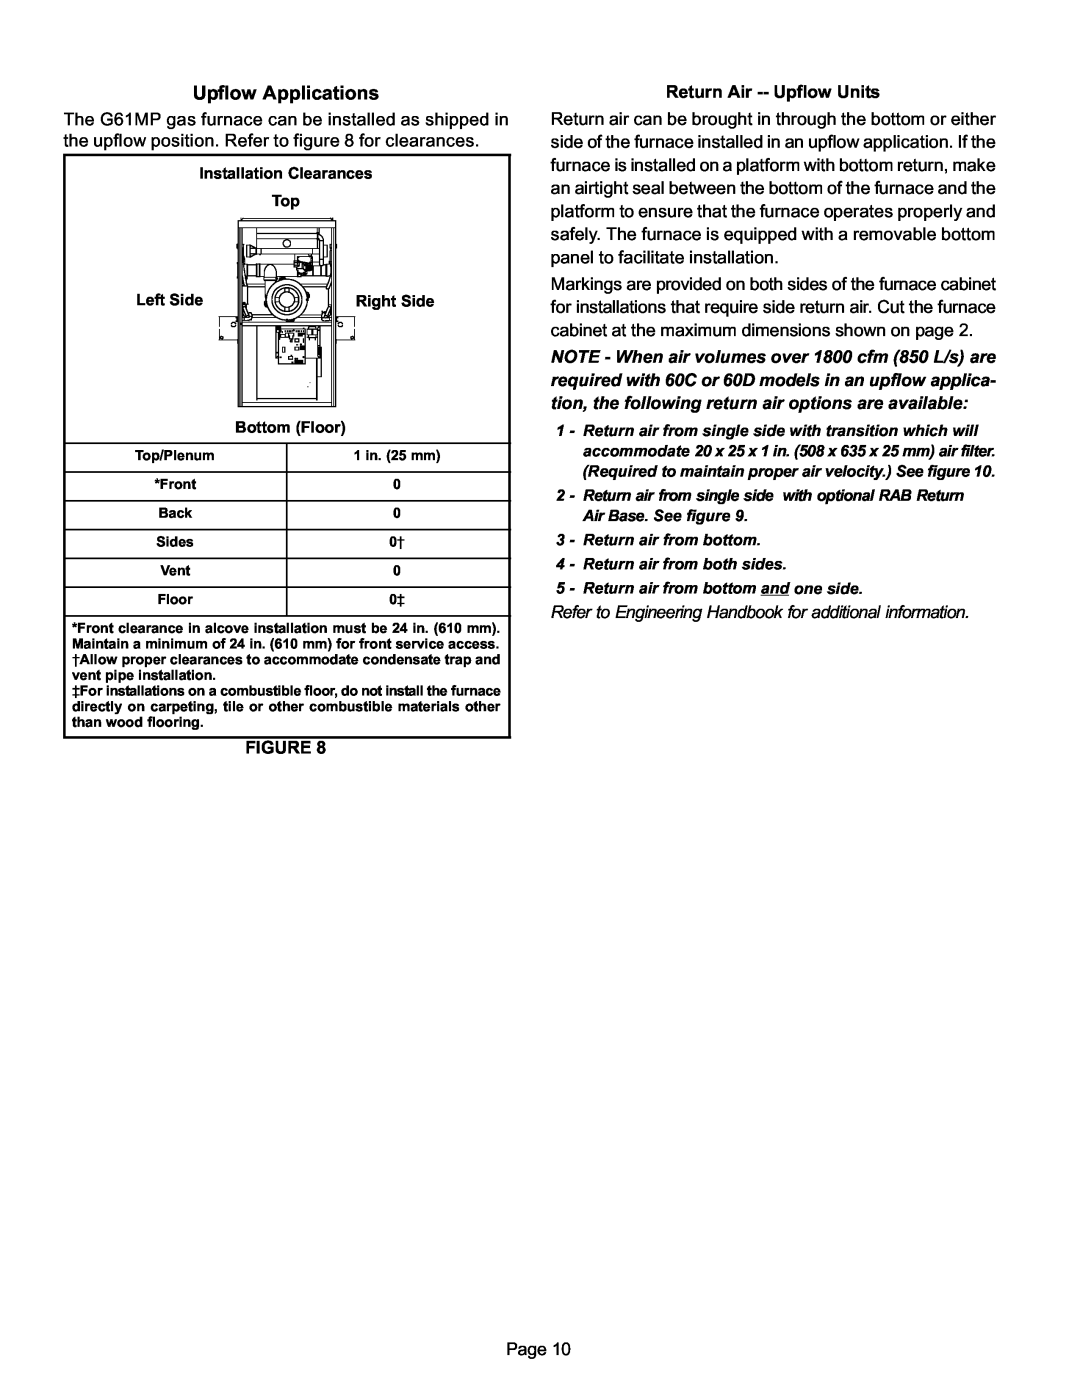 Lennox International Inc Gas Units, G61MP Series Units installation instructions Upflow Applications 